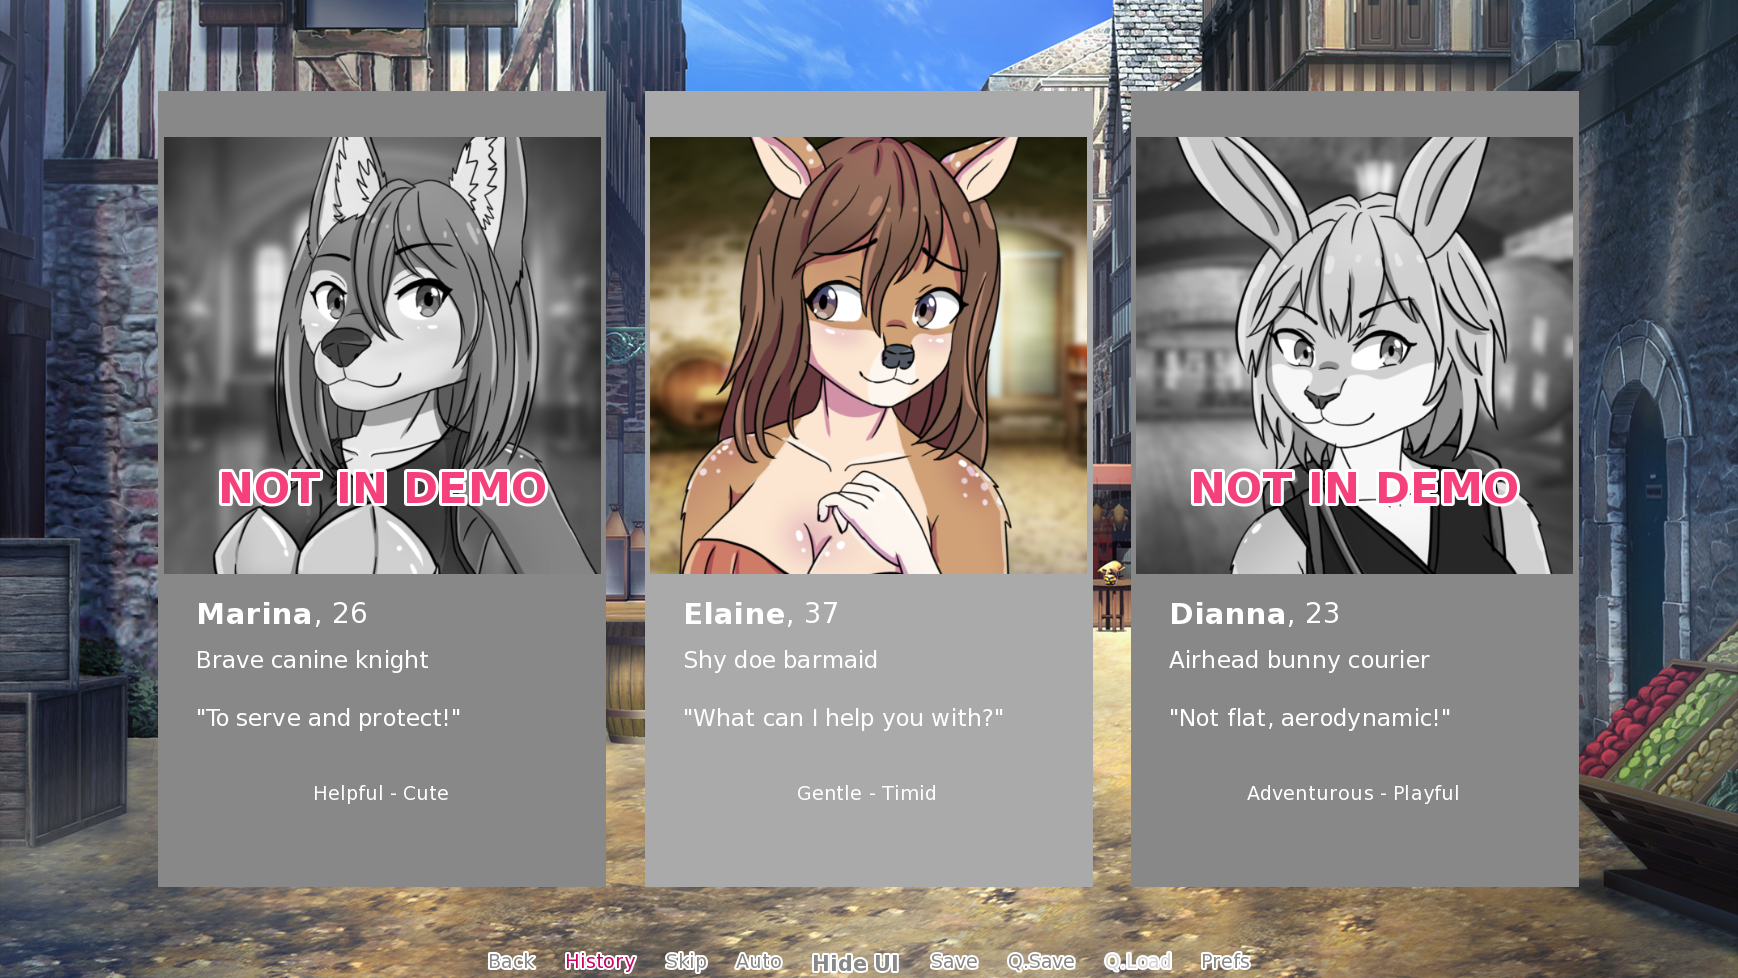 Flat Chested Furry Sex - Furry Hentai Isekai [DEMO] - free game download, reviews, mega - xGames